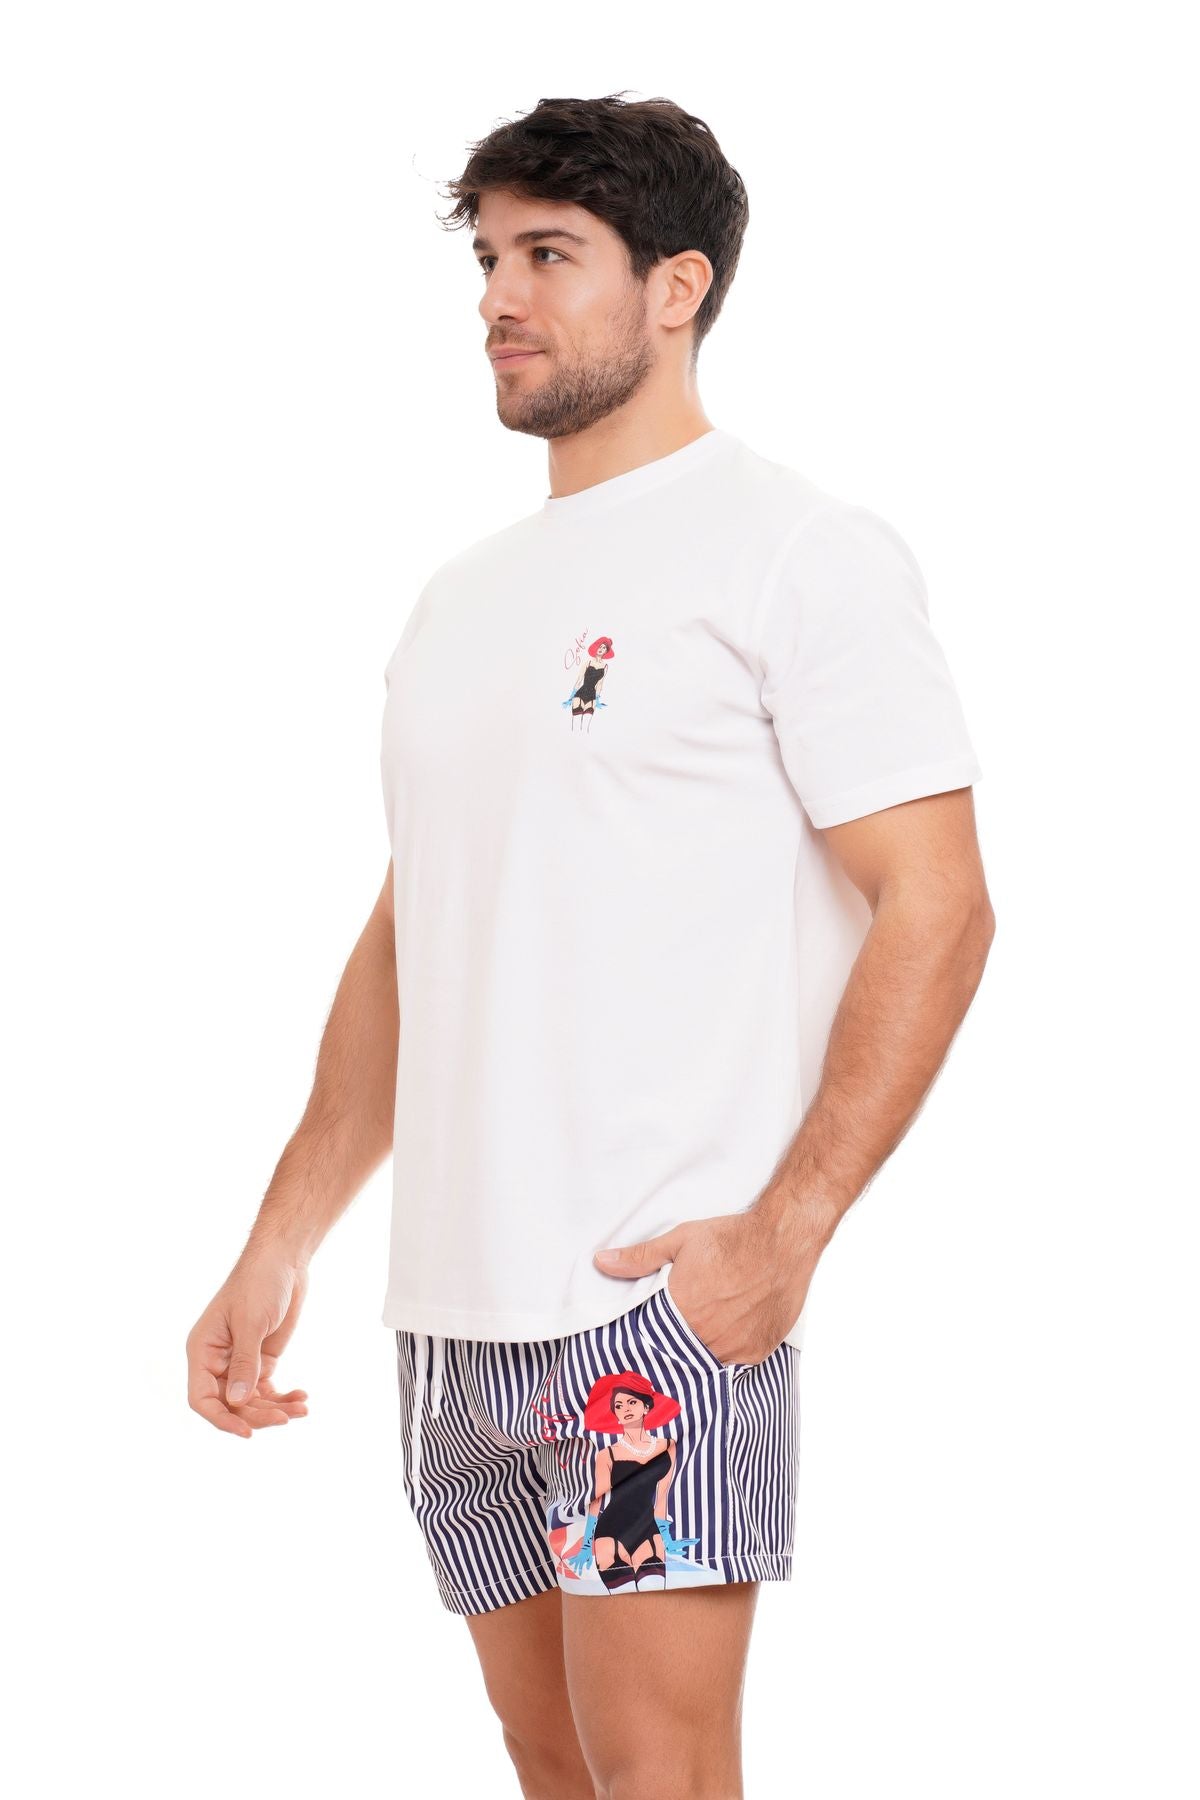 TS Loren Bianco - T-Shirt - Move Beachwear